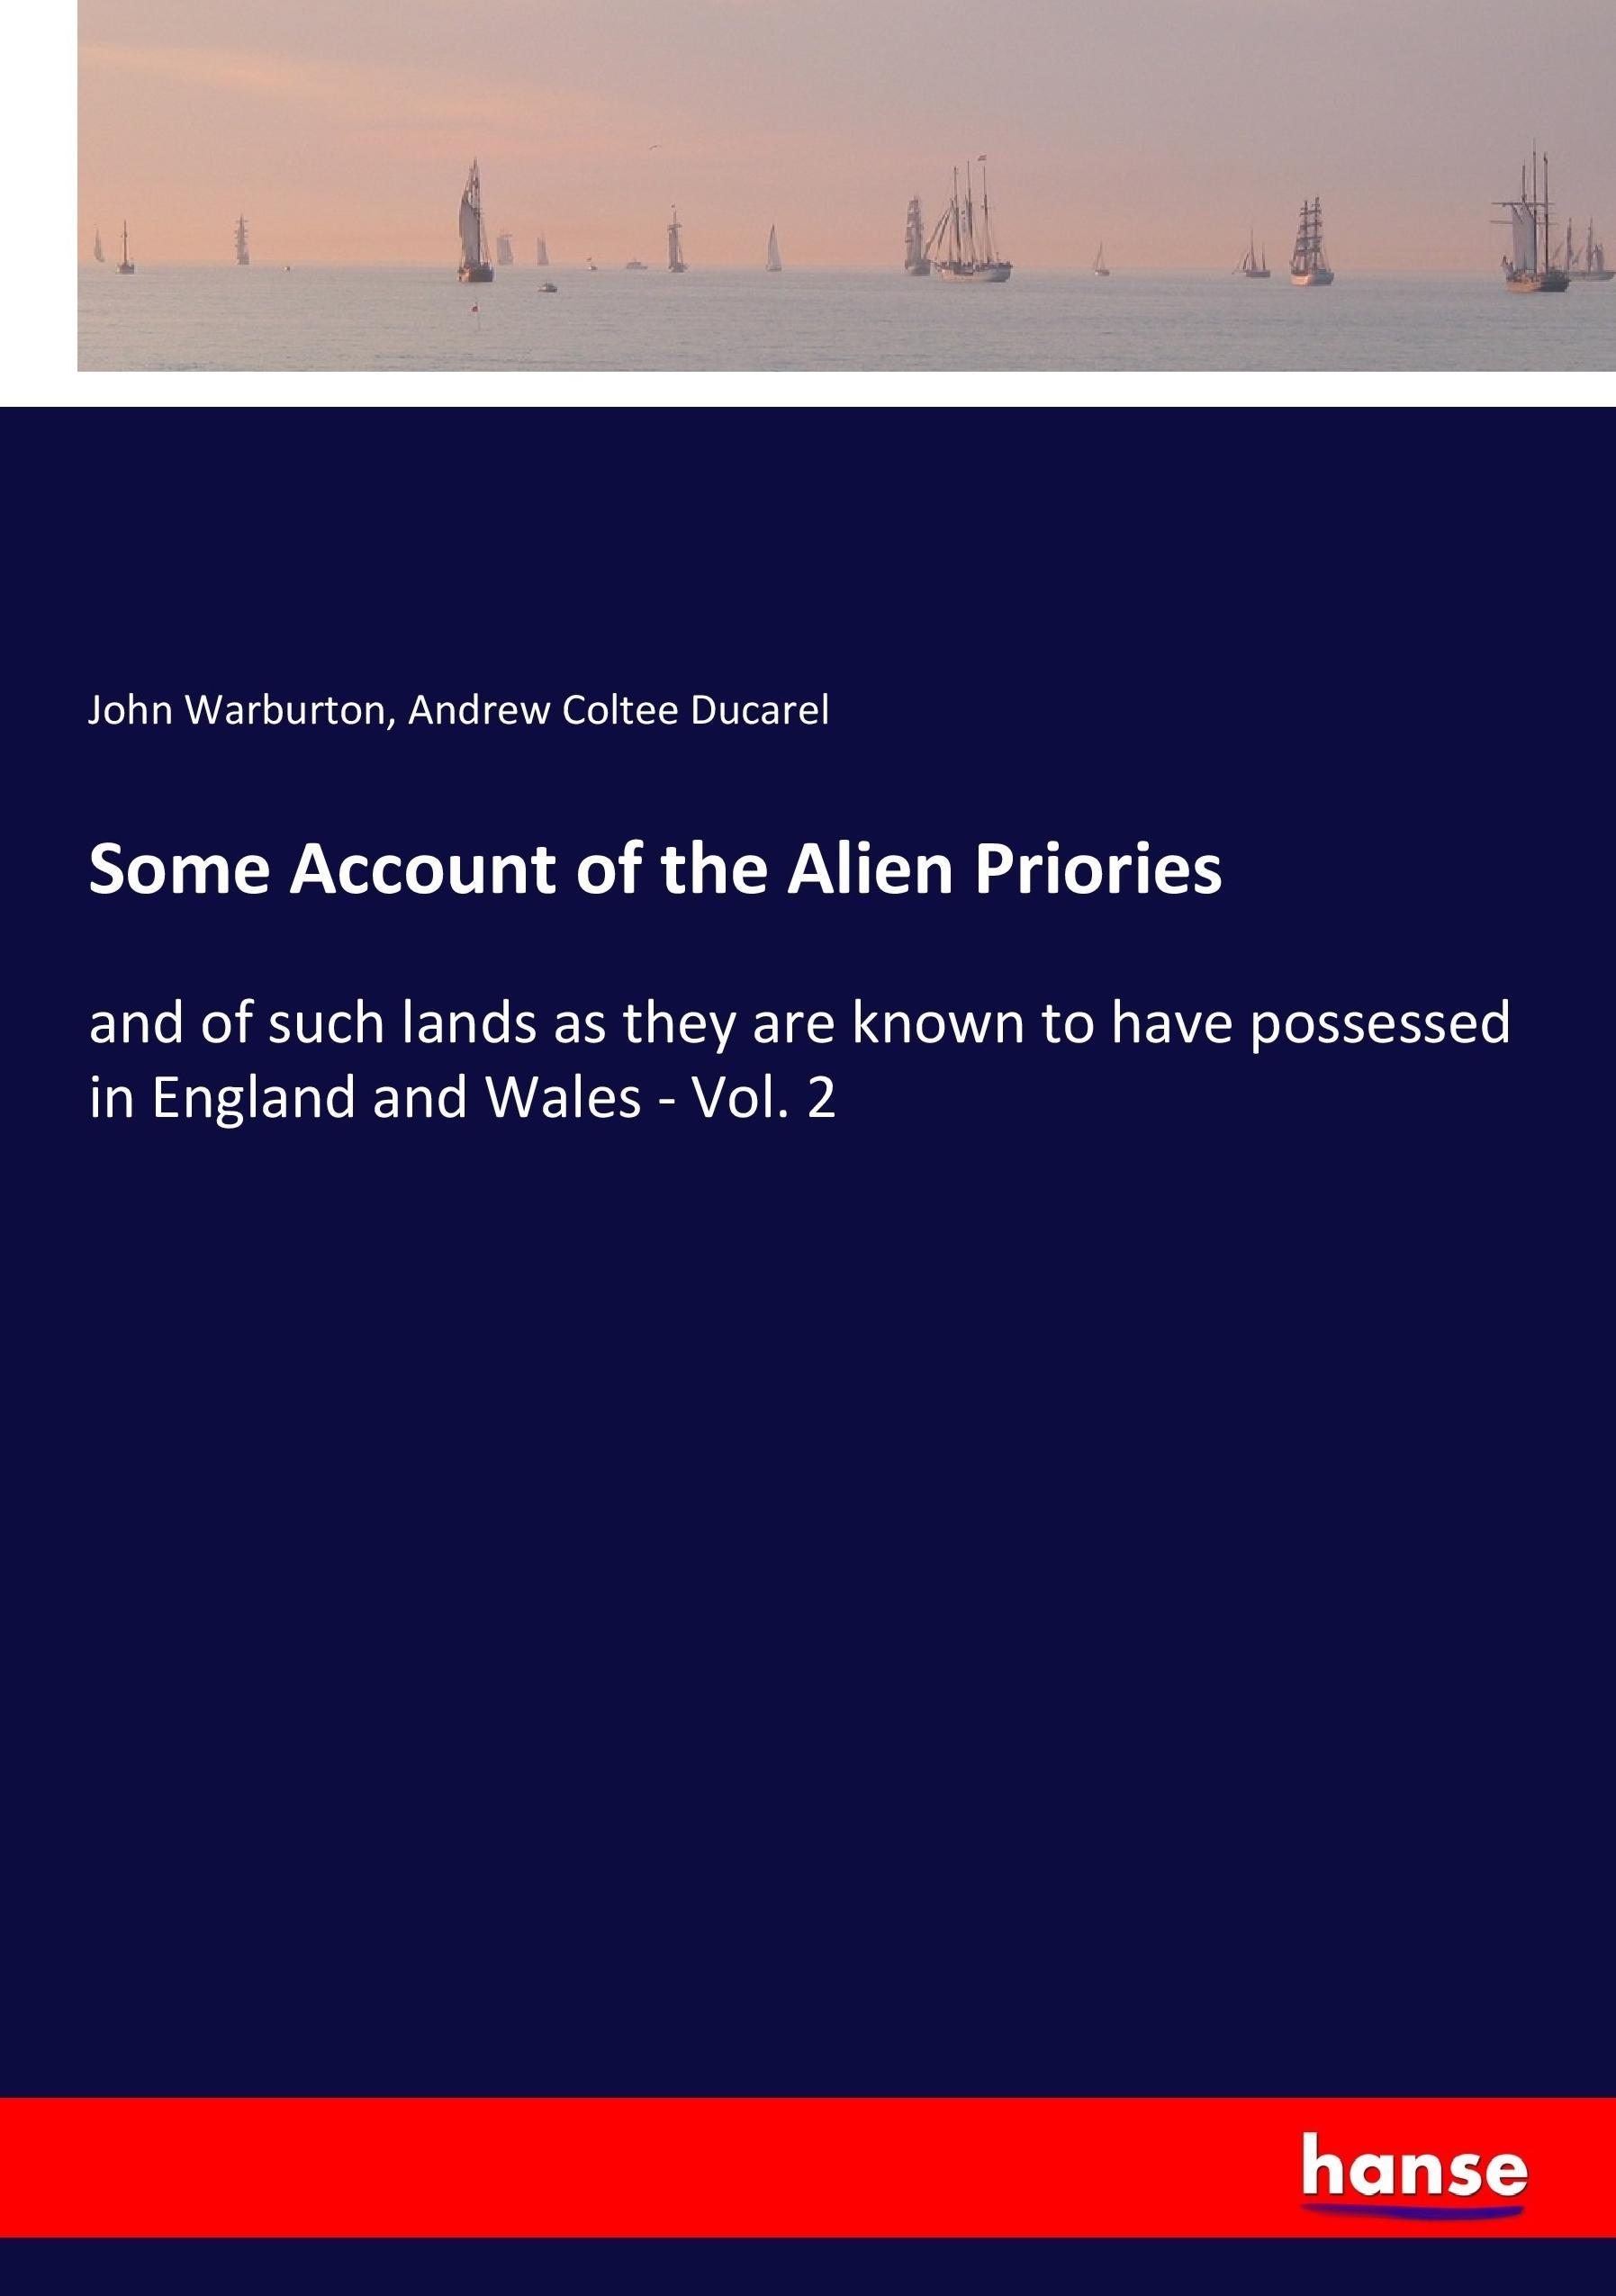 Some Account of the Alien Priories - Warburton, John Ducarel, Andrew Coltee